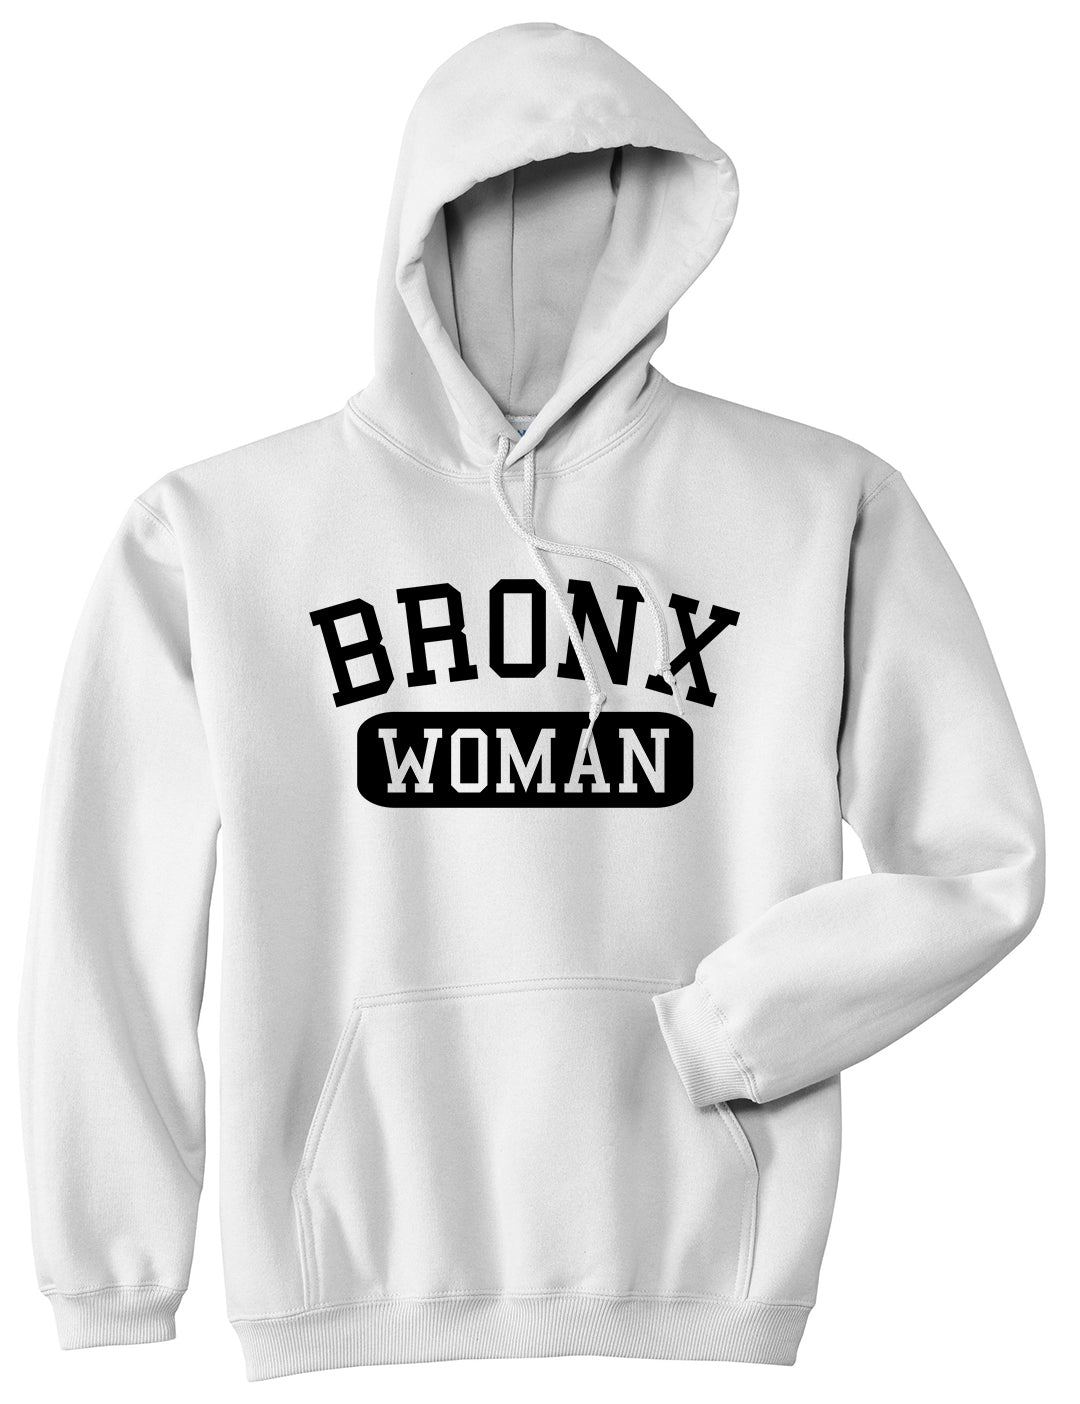 Bronx Woman Mens Pullover Hoodie White